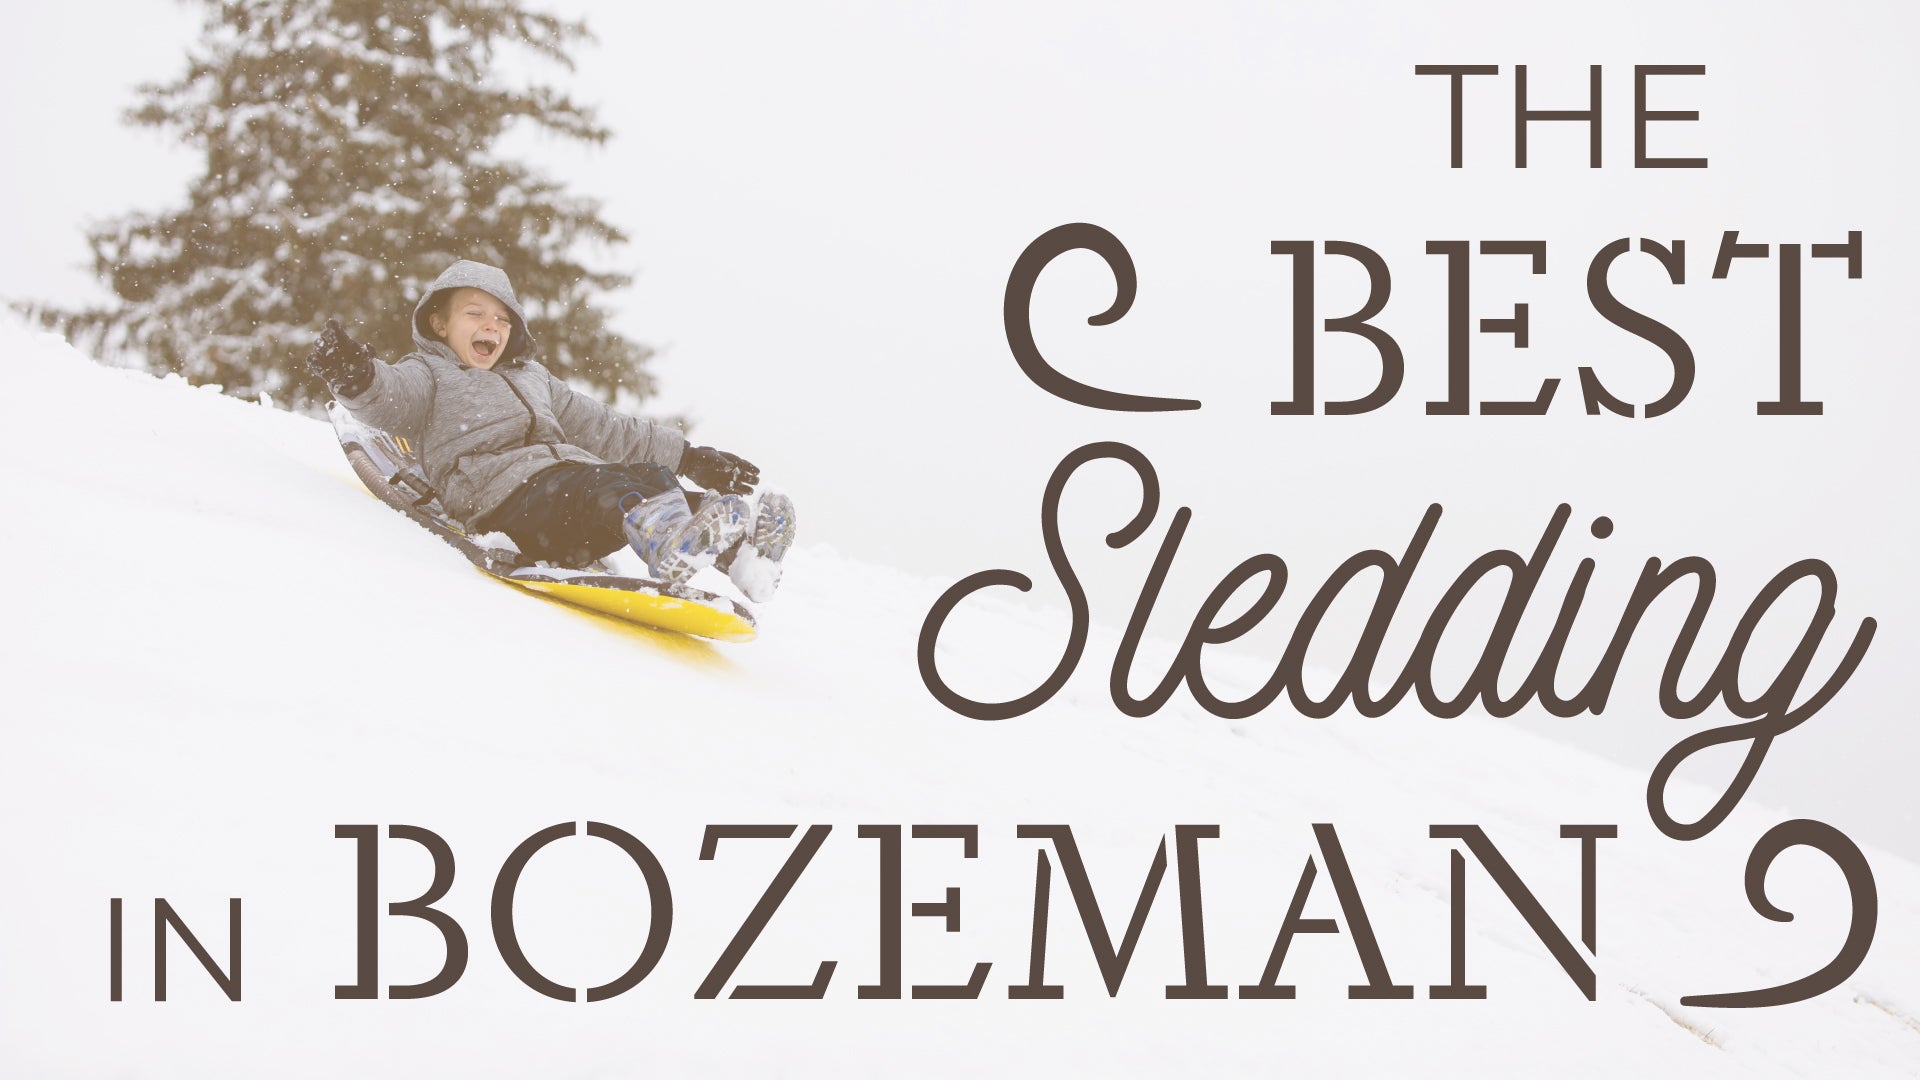 The Best Sledding in Bozeman!